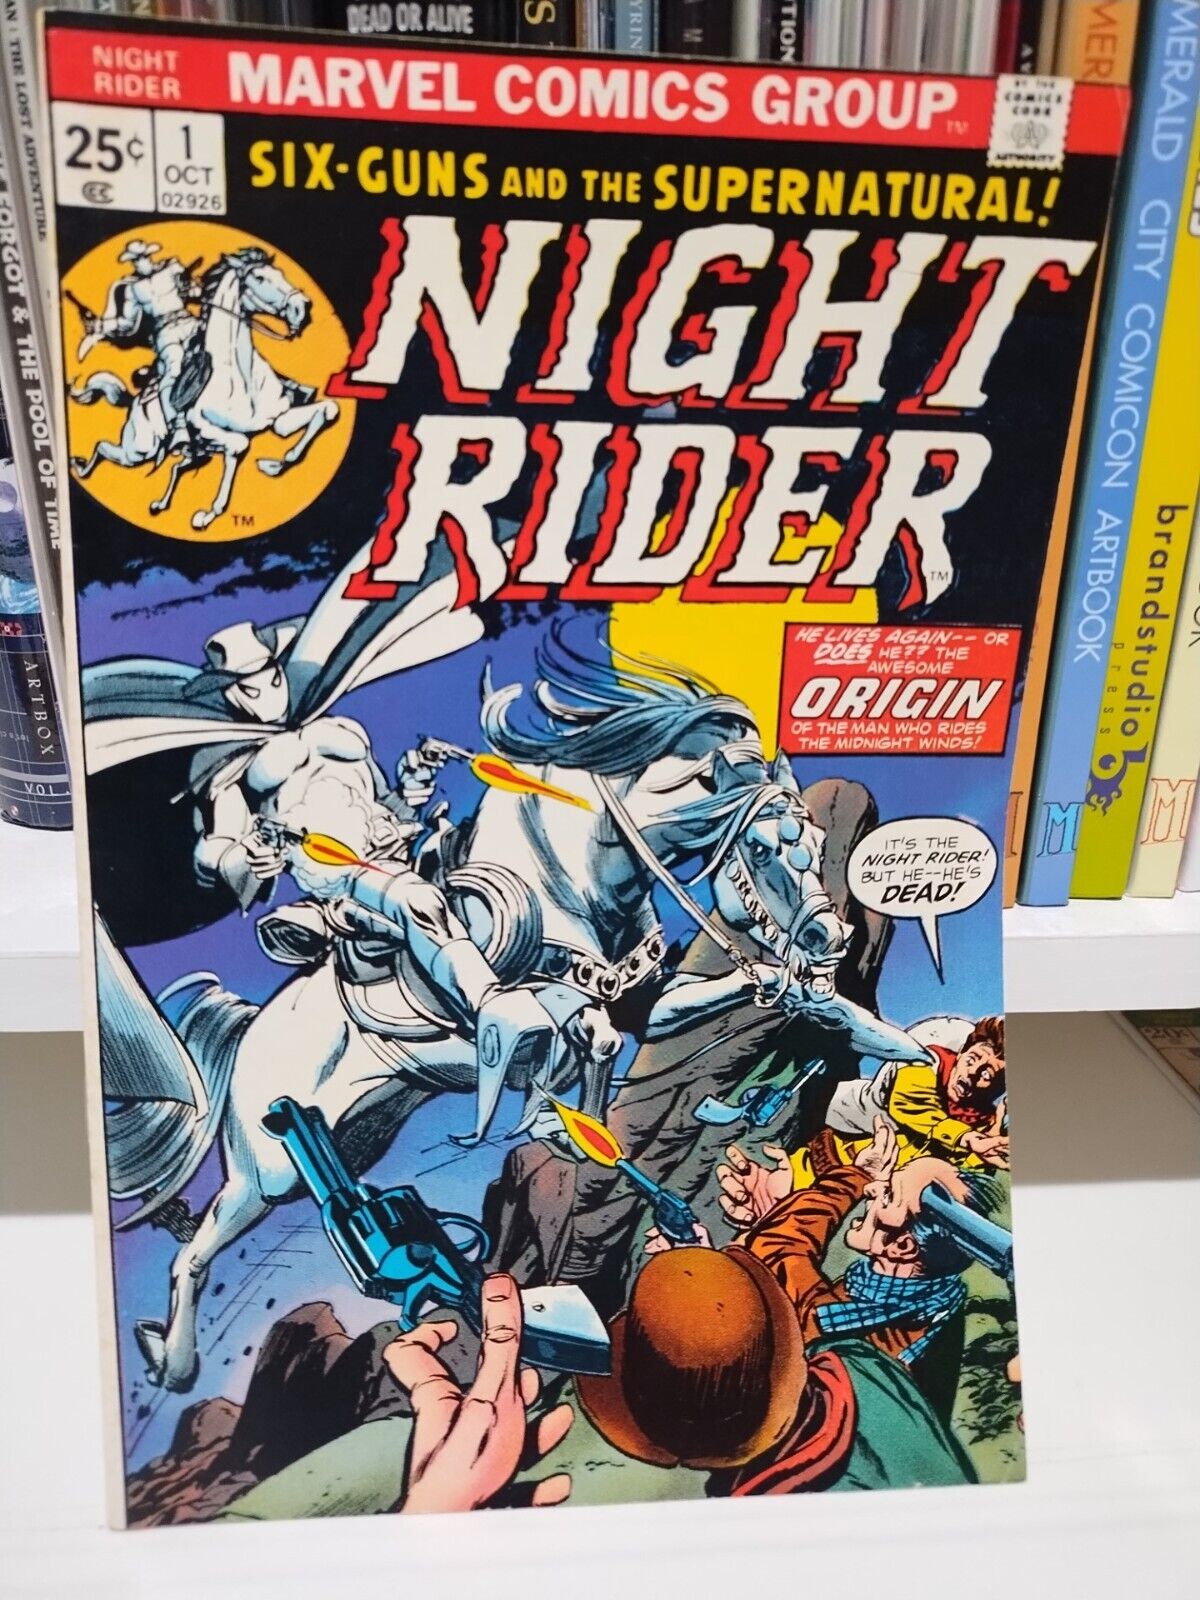 Marvel Comics NIGHT RIDER #1 (1974) *Western “Ghost Rider”